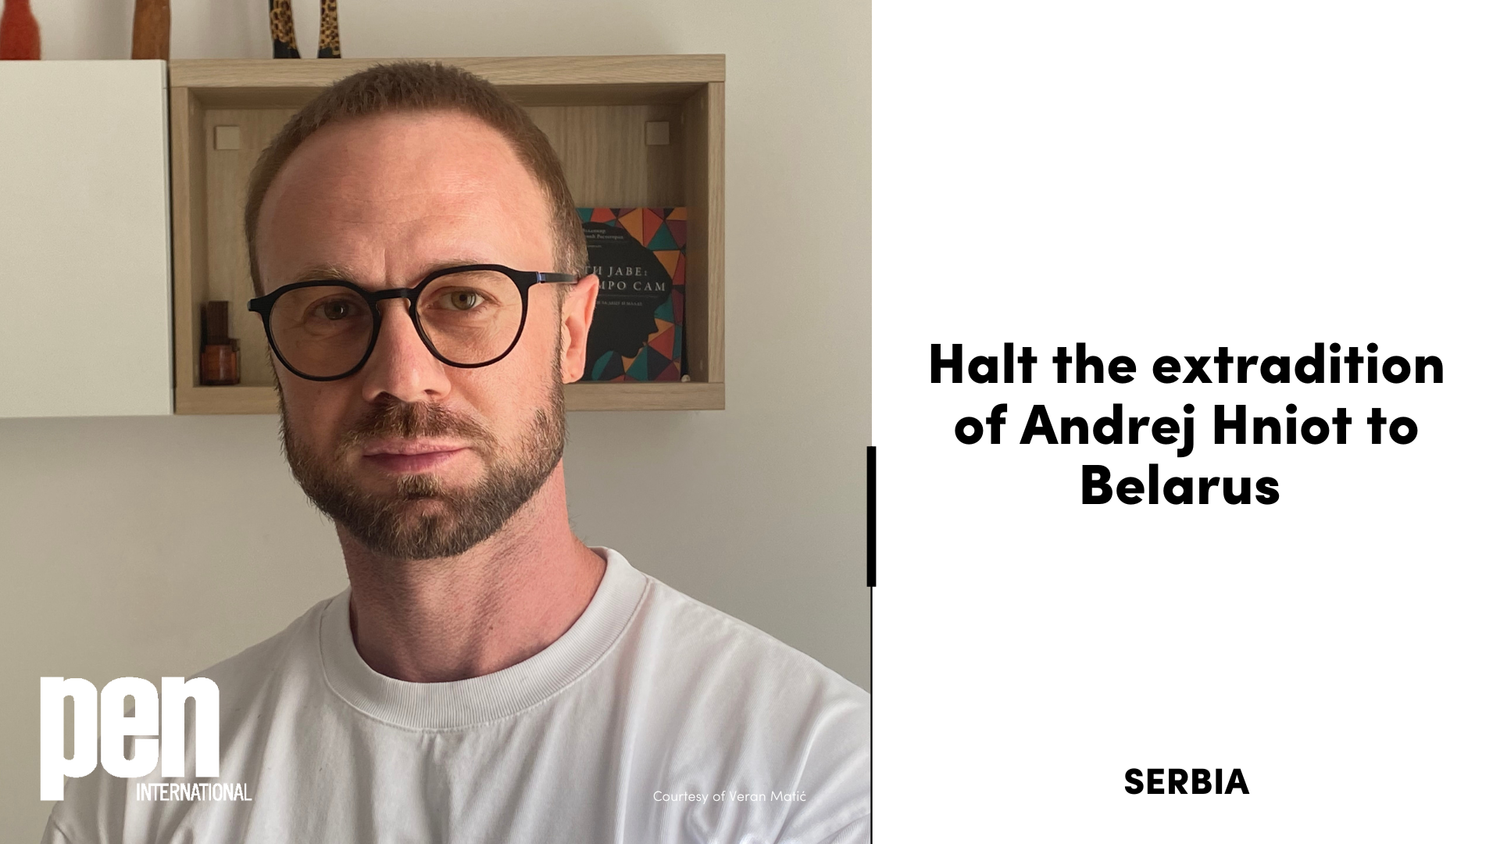 Serbia: Halt the extradition of Andrej Hniot to Belarus